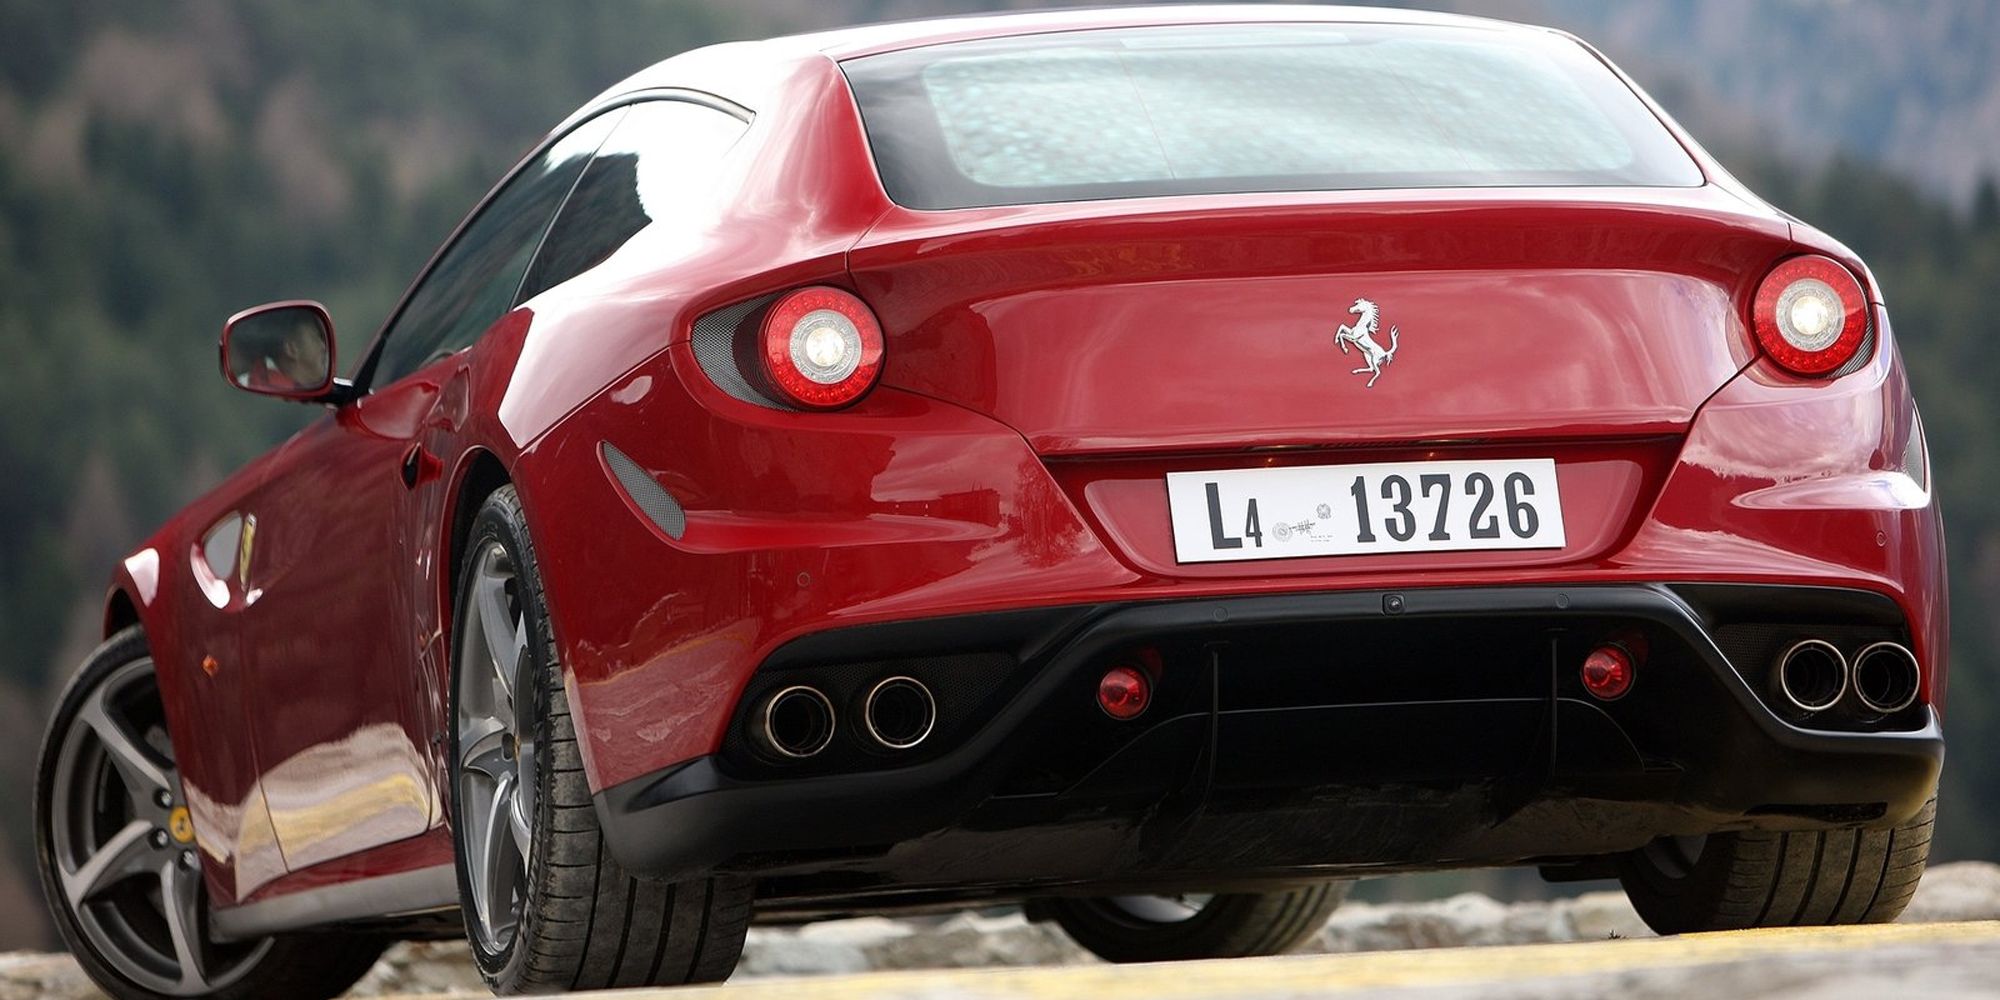 The rear of the Ferrari FF